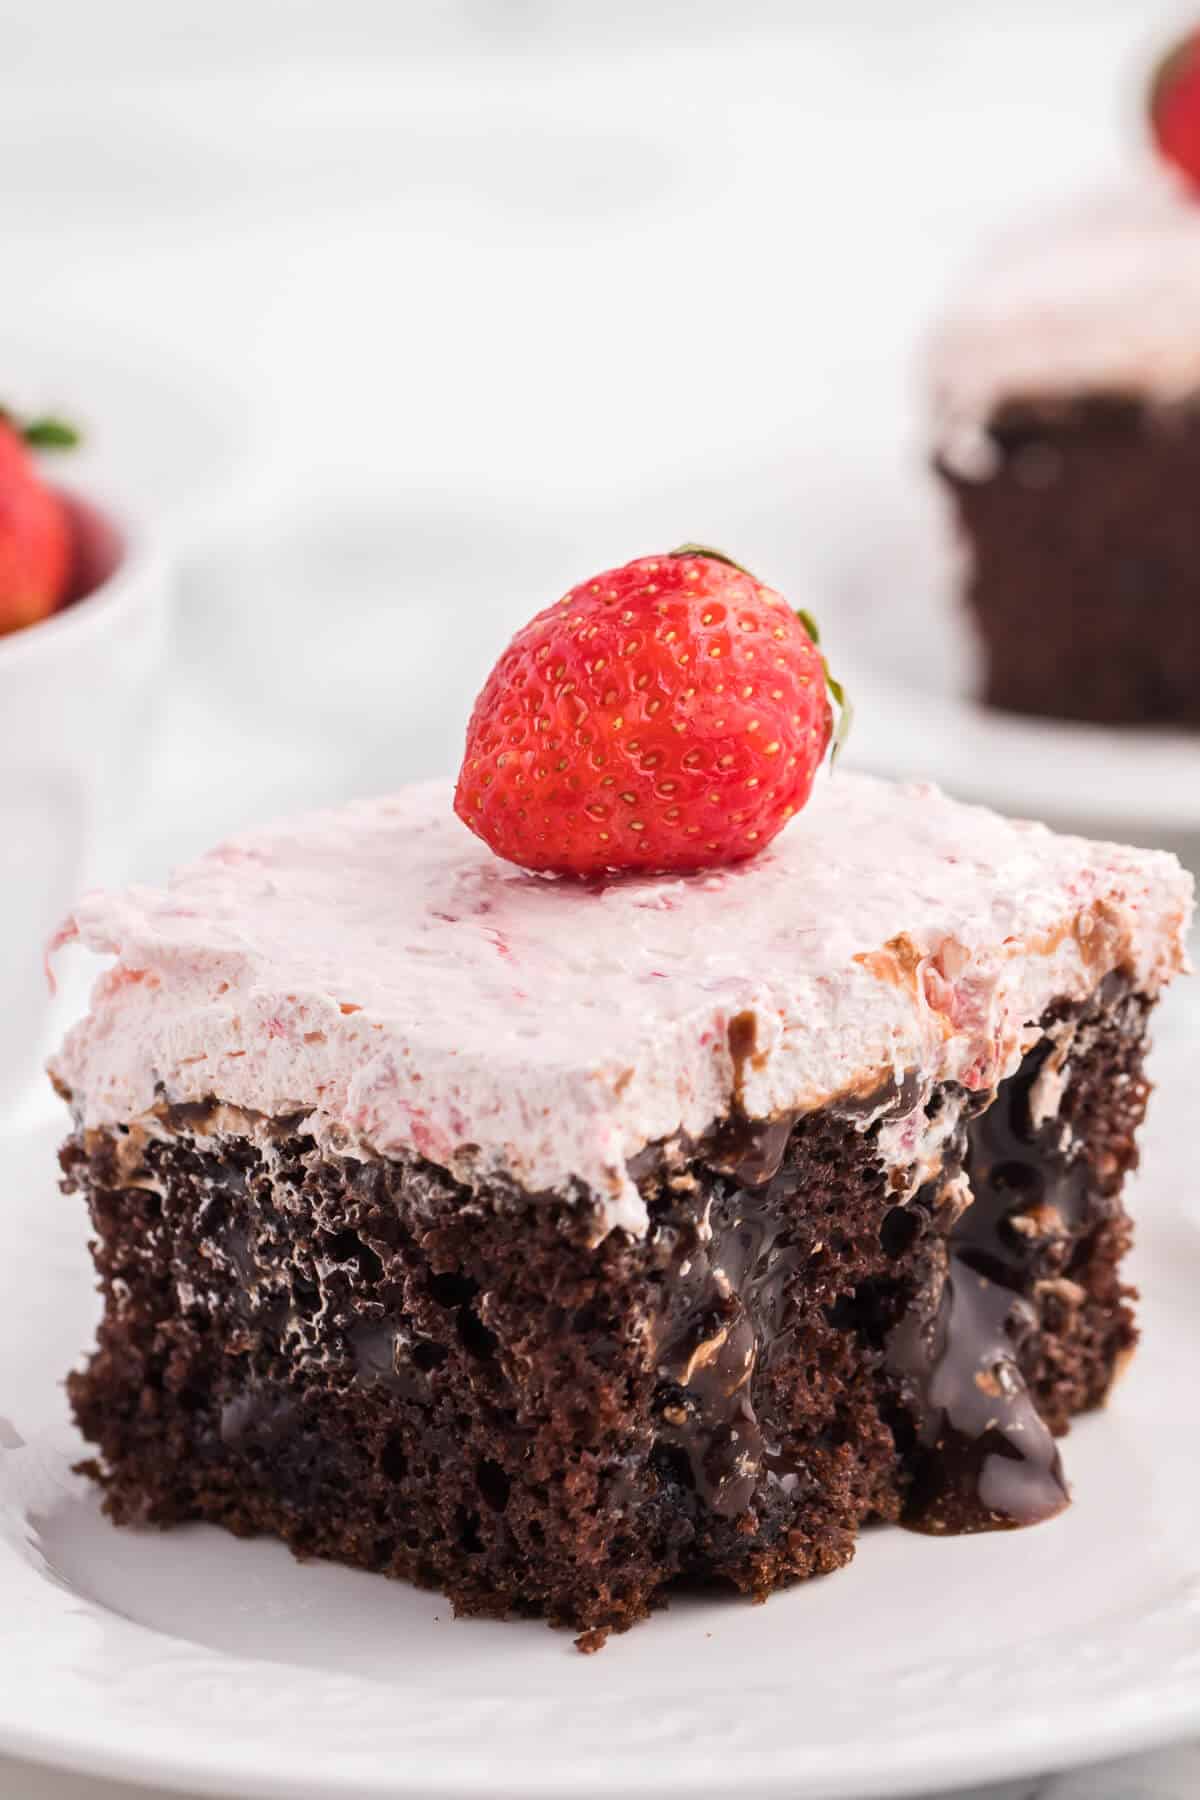 Strawberry and Chocolate Poke Cake